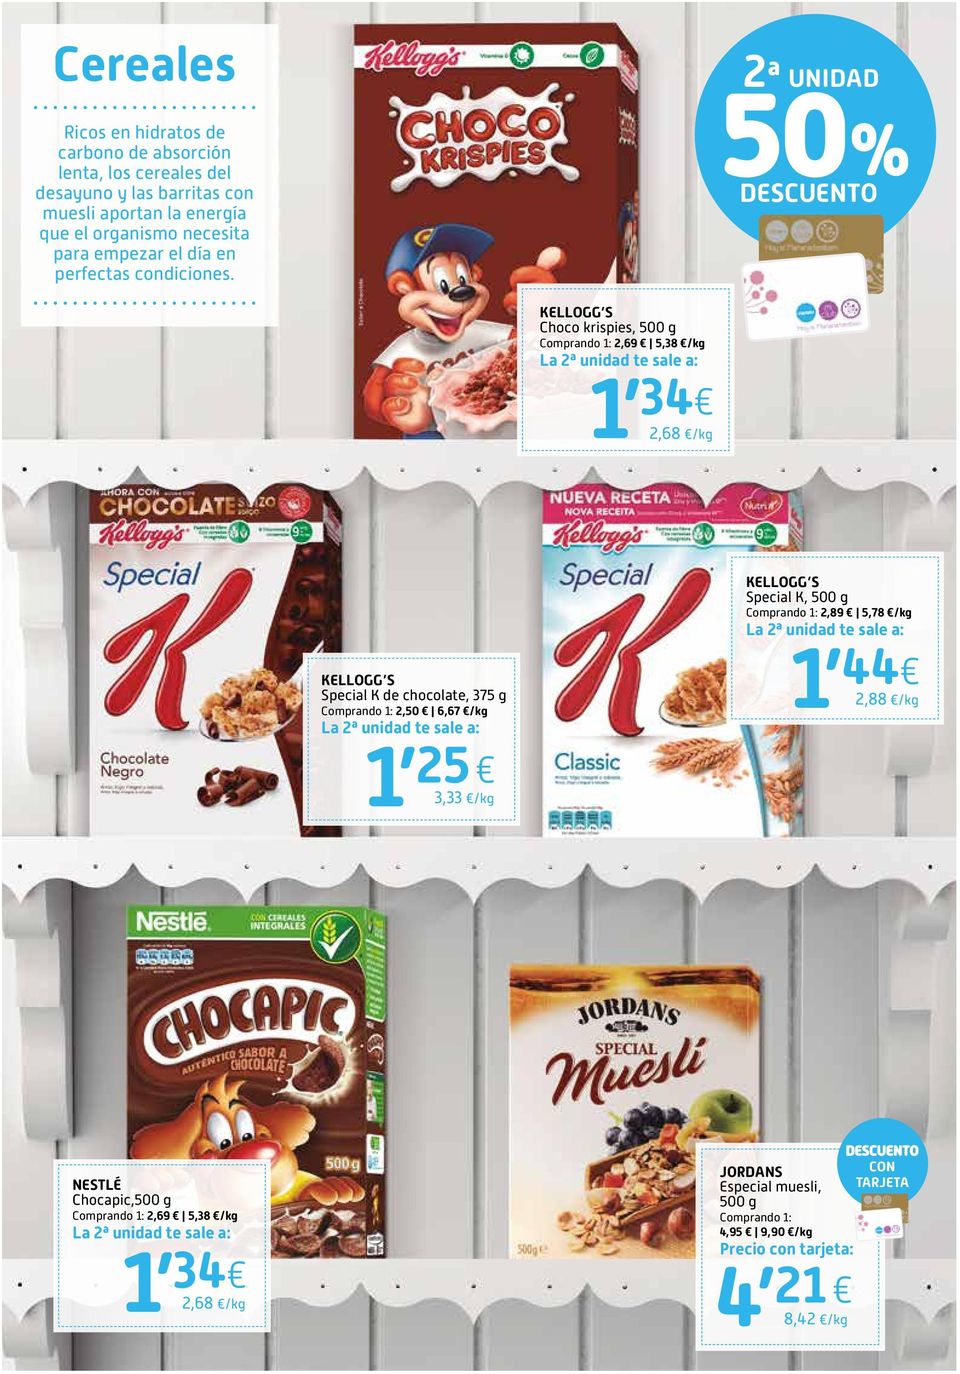 KELLOGG S Choco krispies, 500 g 2,69 5,38 /kg 1 34 2,68 /kg KELLOGG S Special K de chocolate, 375 g 2,50 6,67 /kg 1 25